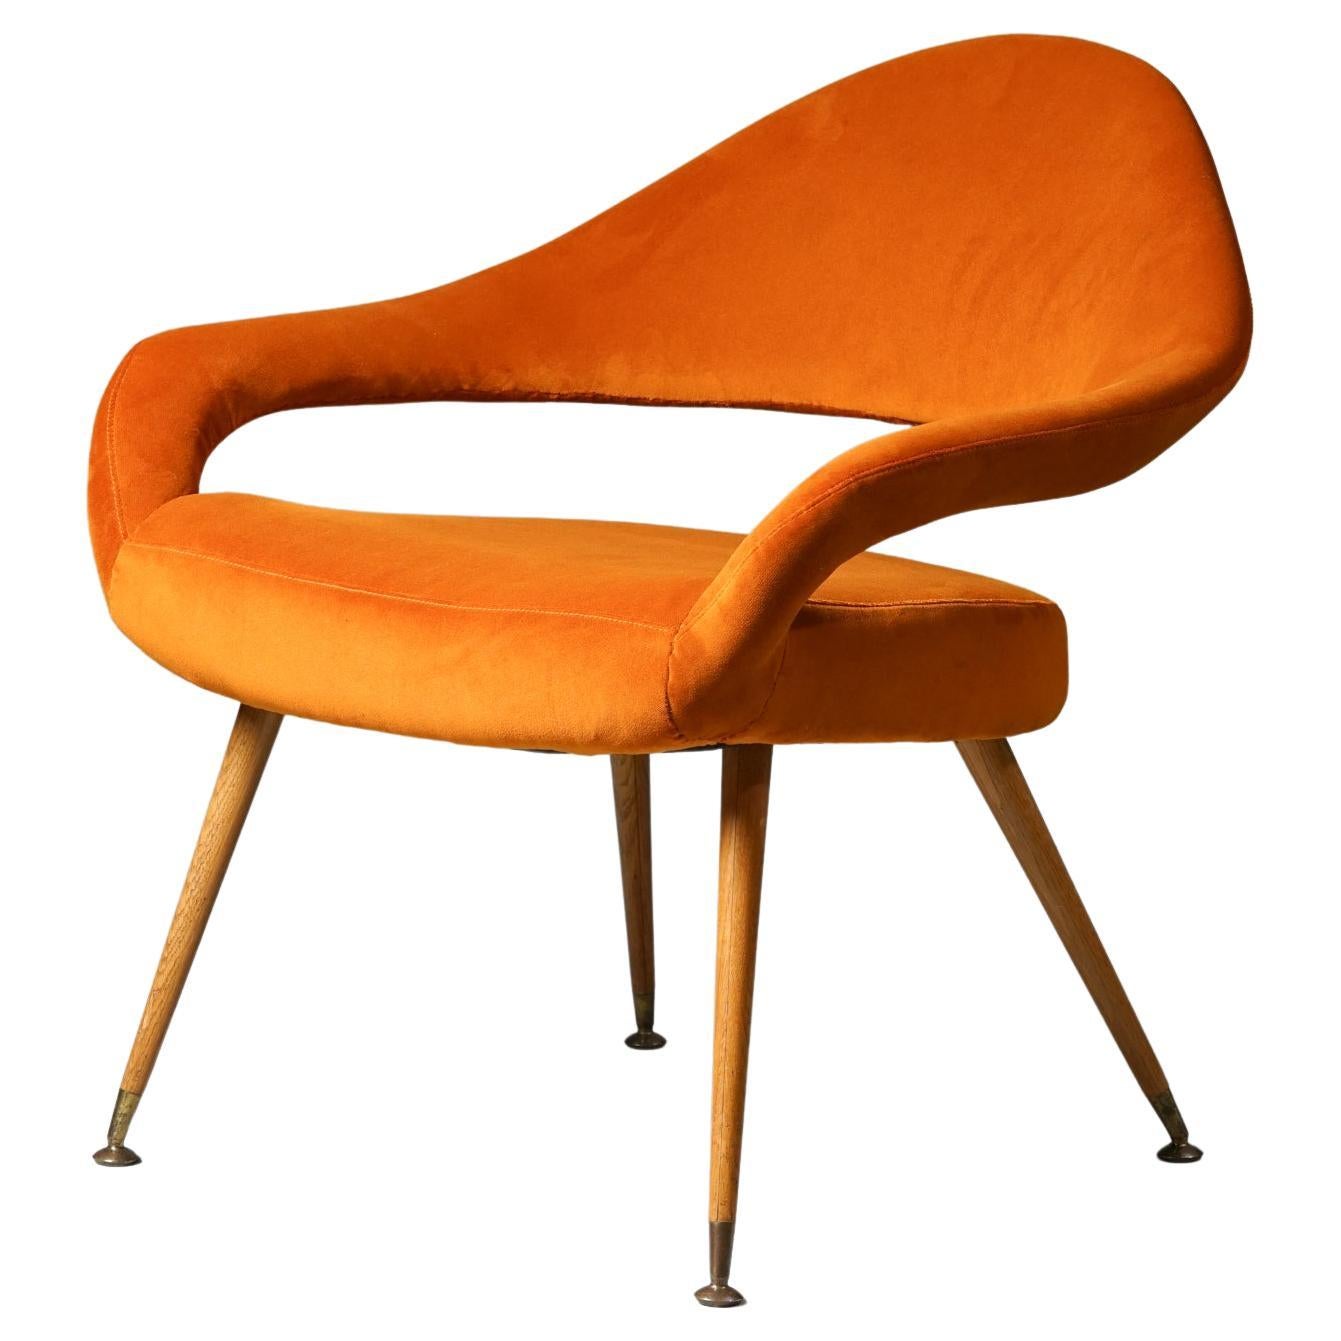 Rare Model "DU 55 P" Lounge Chair by Gastone Rinaldi, 1954